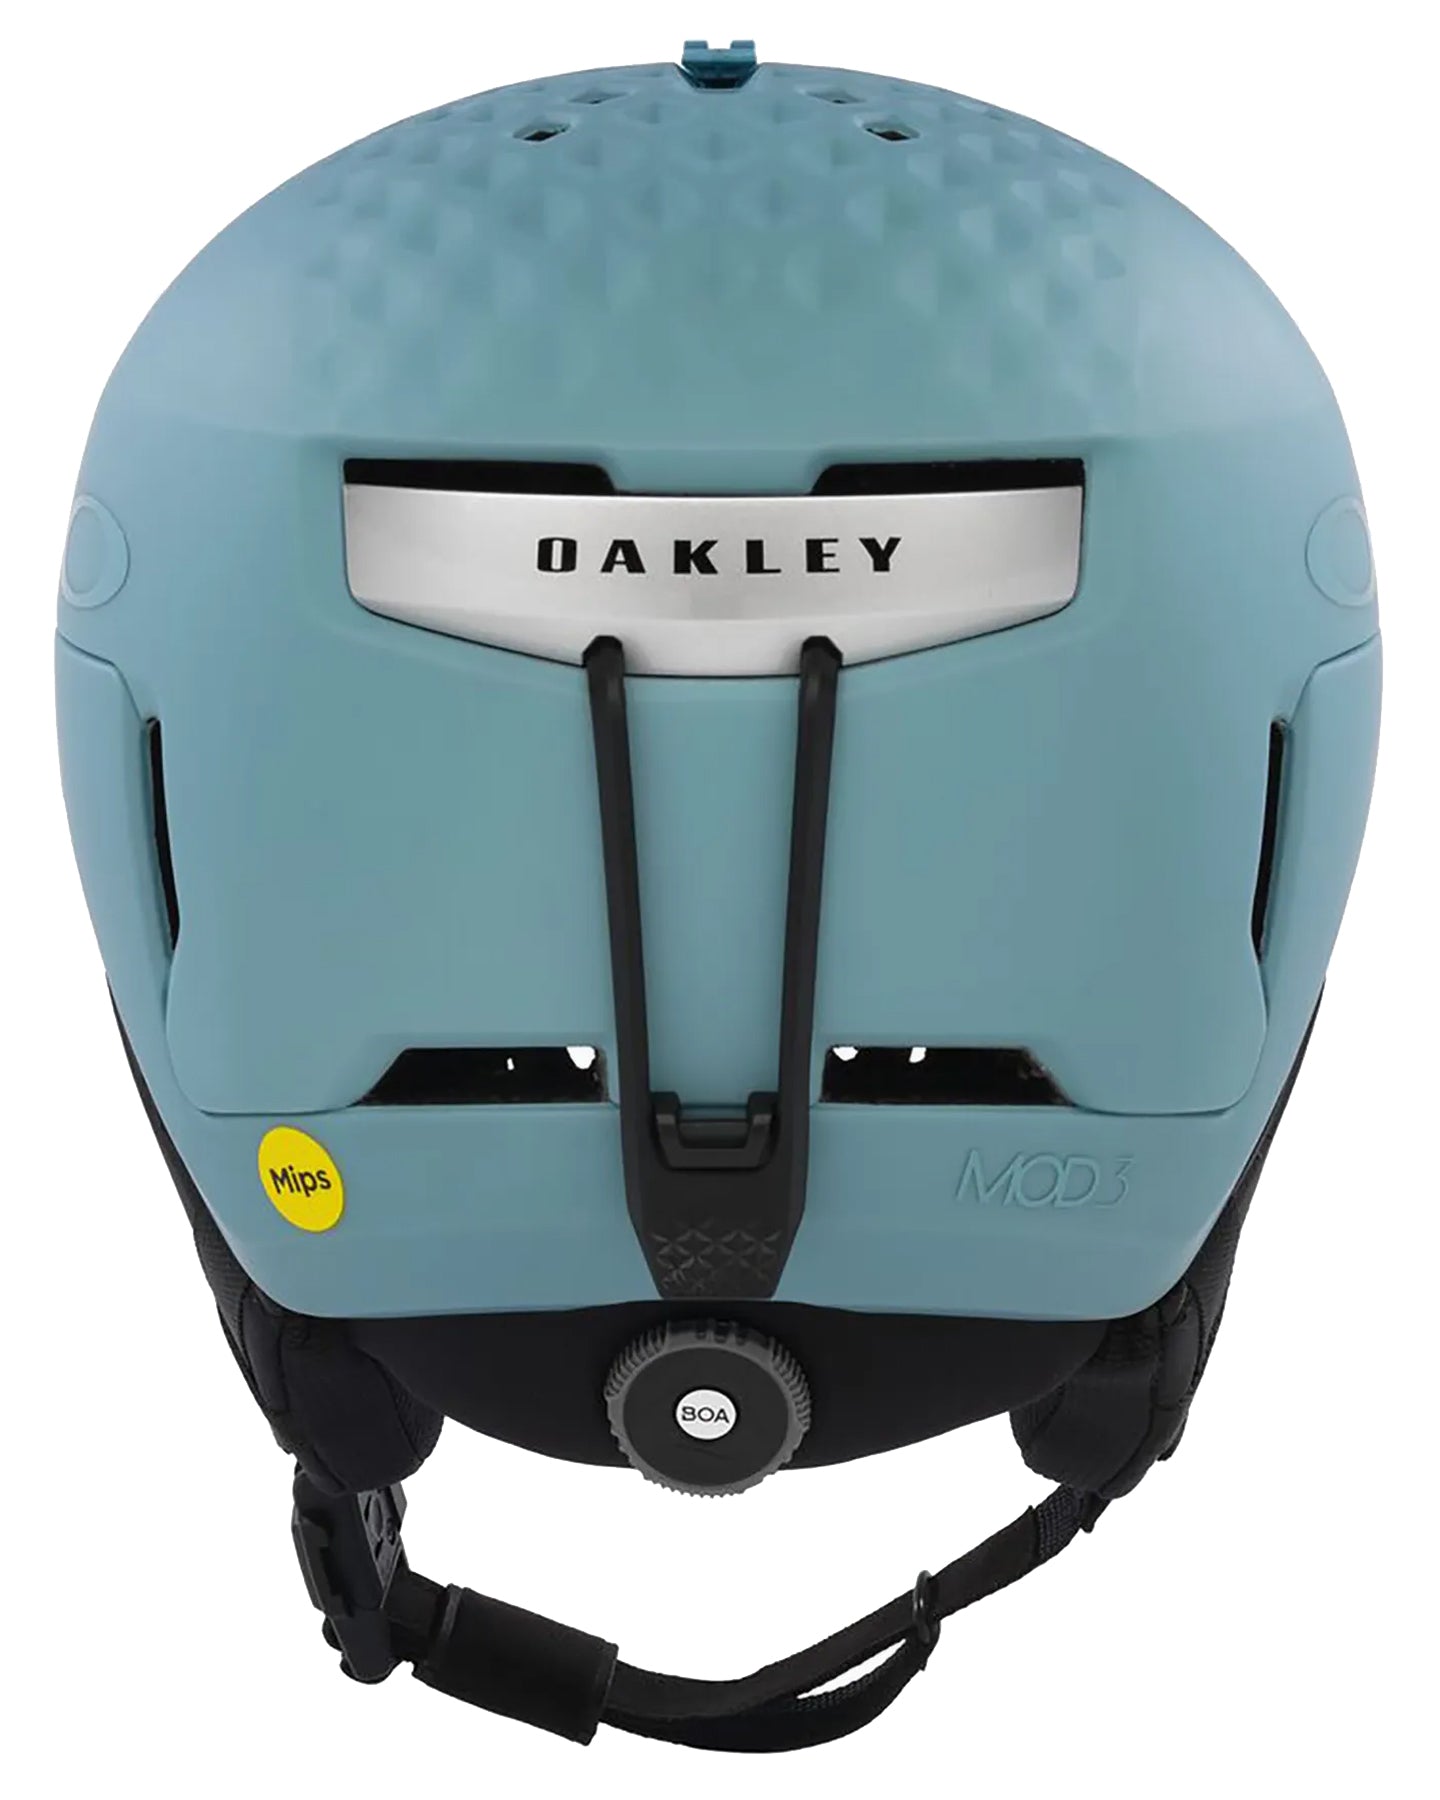 Oakley Mod3 Snow Helmet - Matte Stonewash Men's Snow Helmets - Trojan Wake Ski Snow